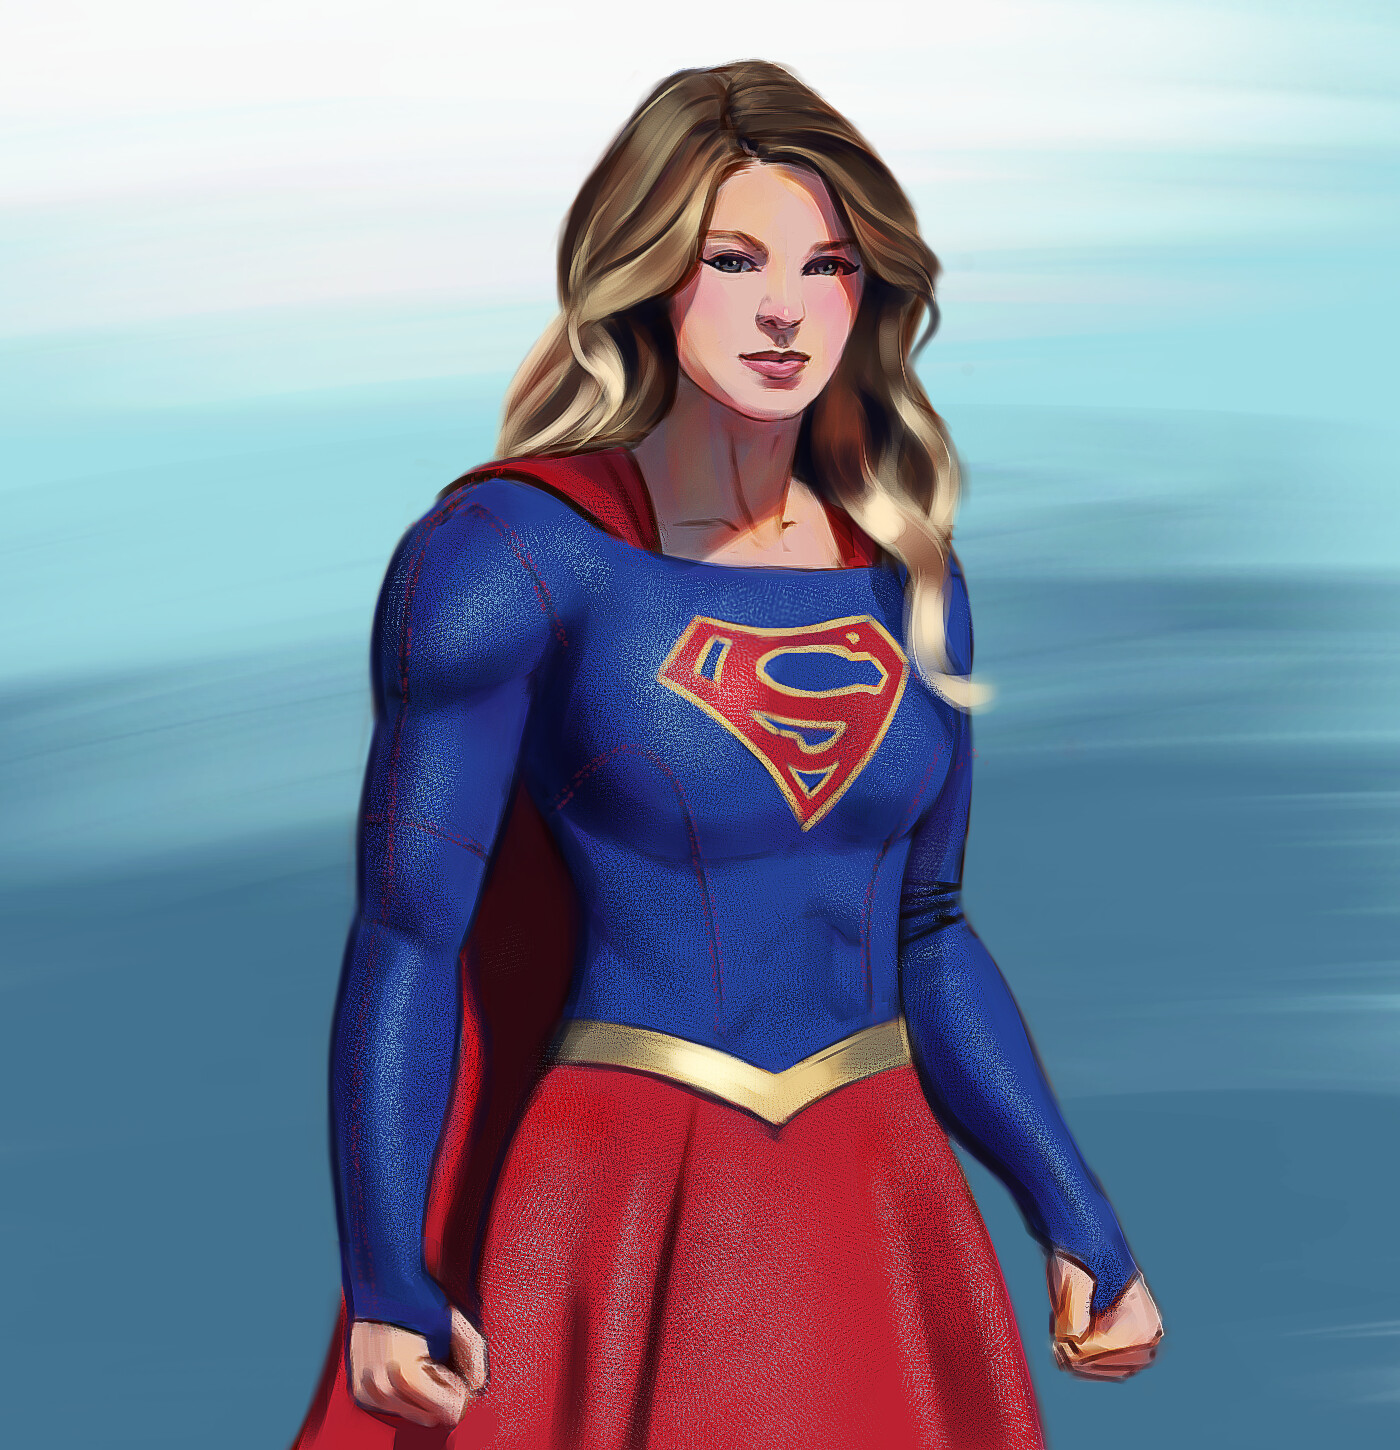 Artstation Supergirl